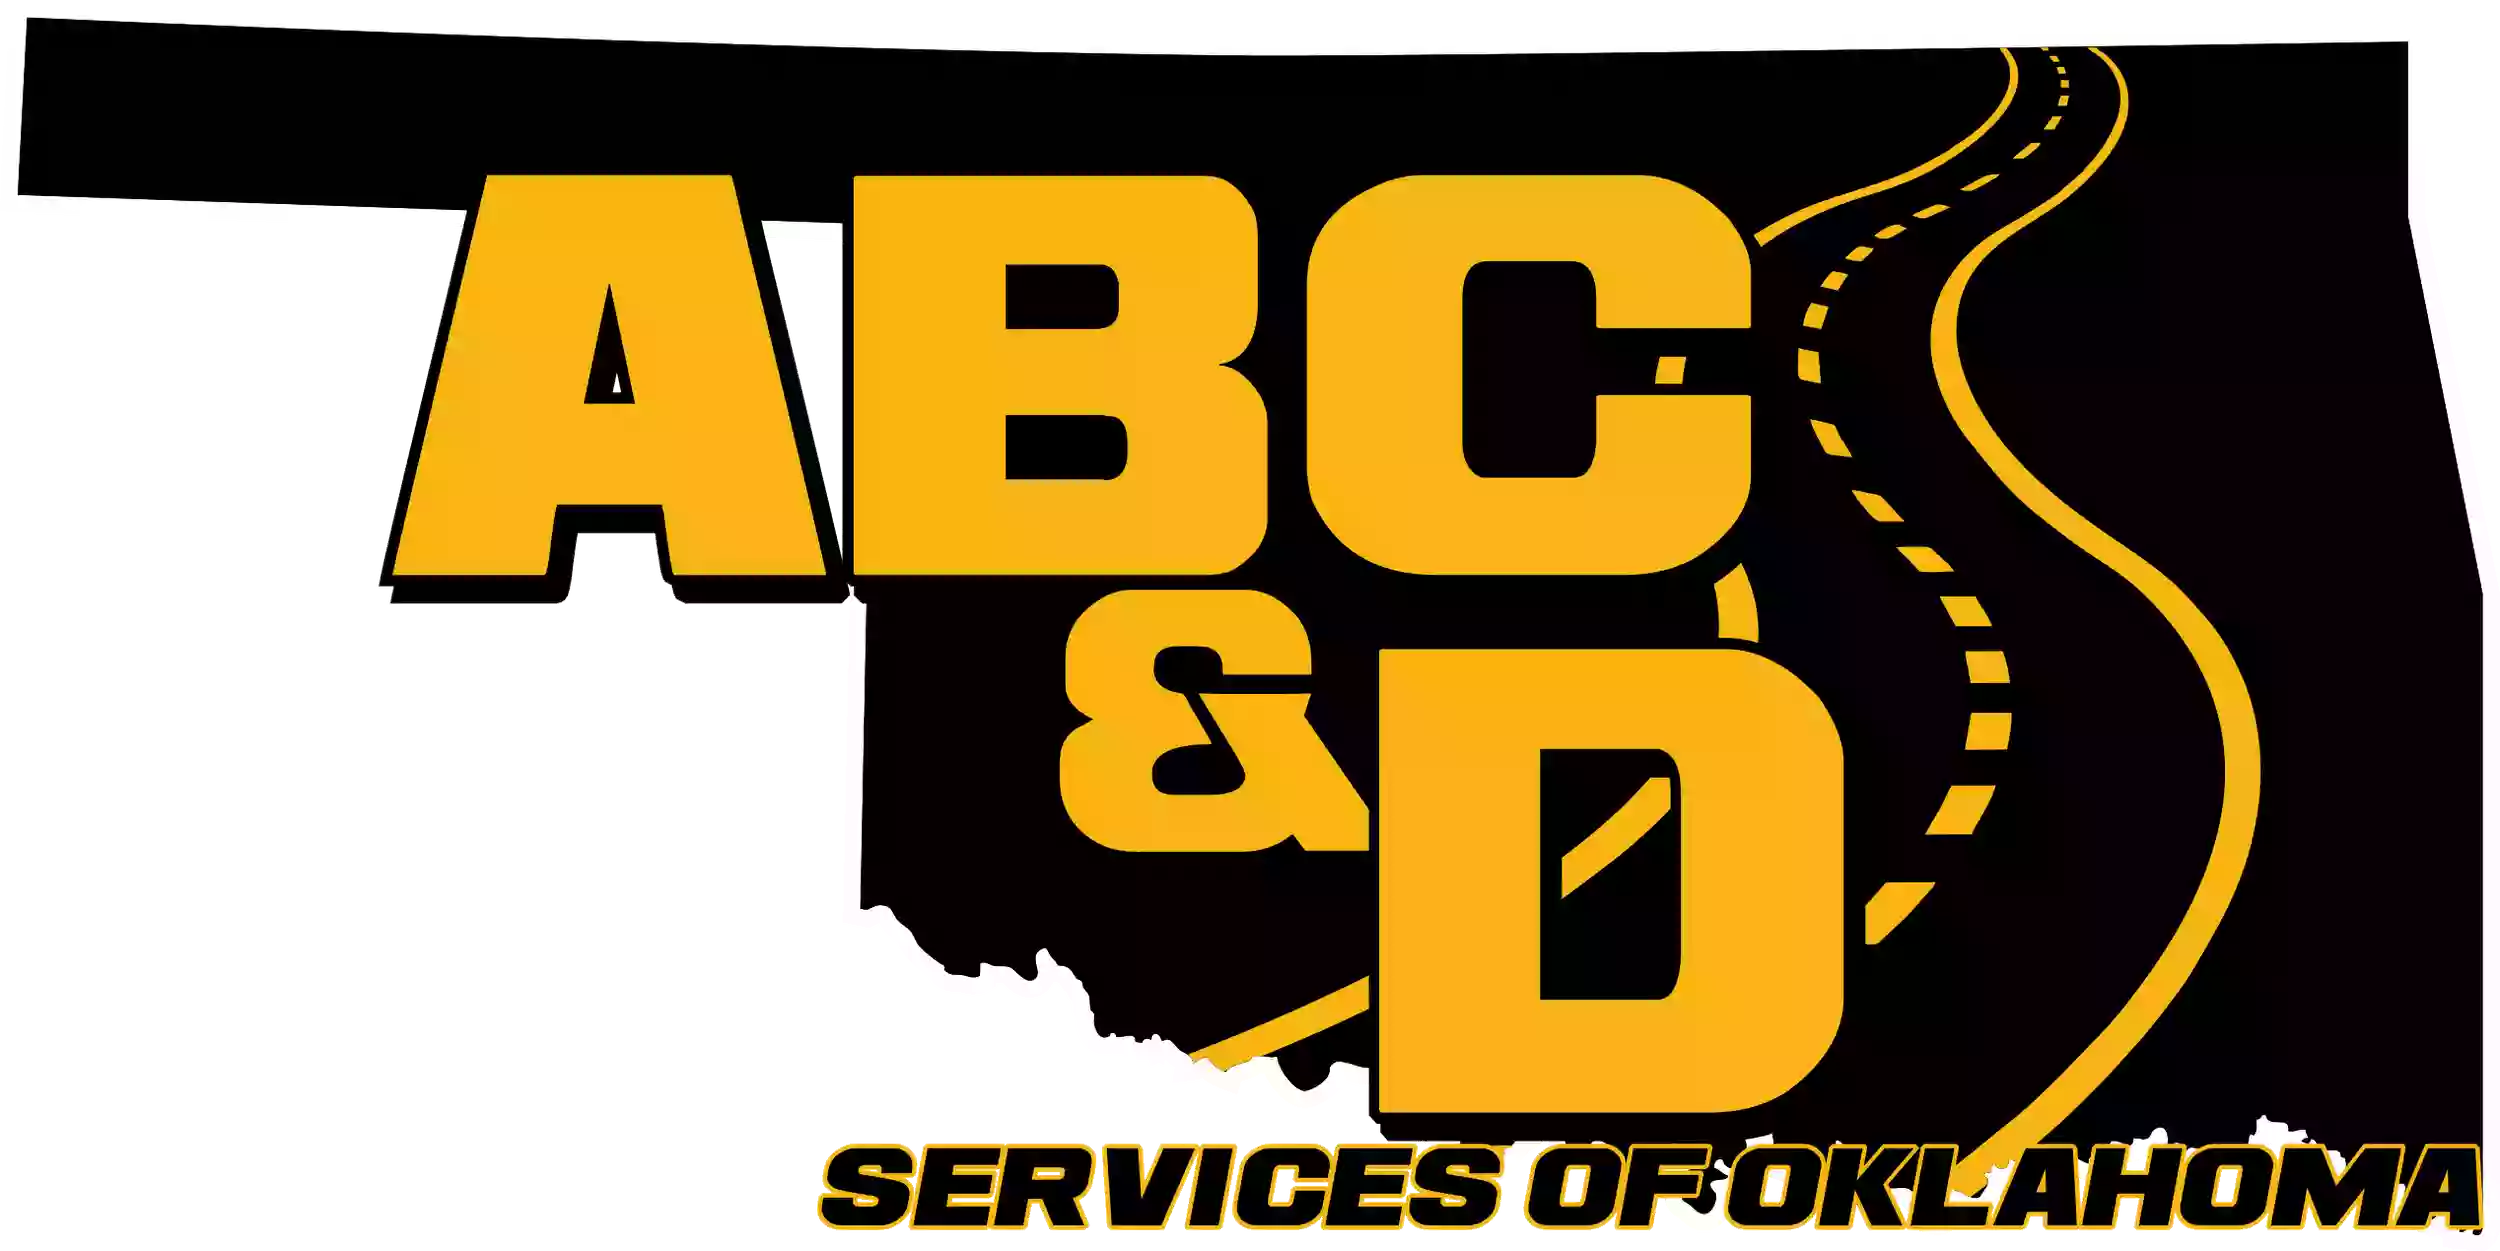 ABC&D Bus Sales of Oklahoma